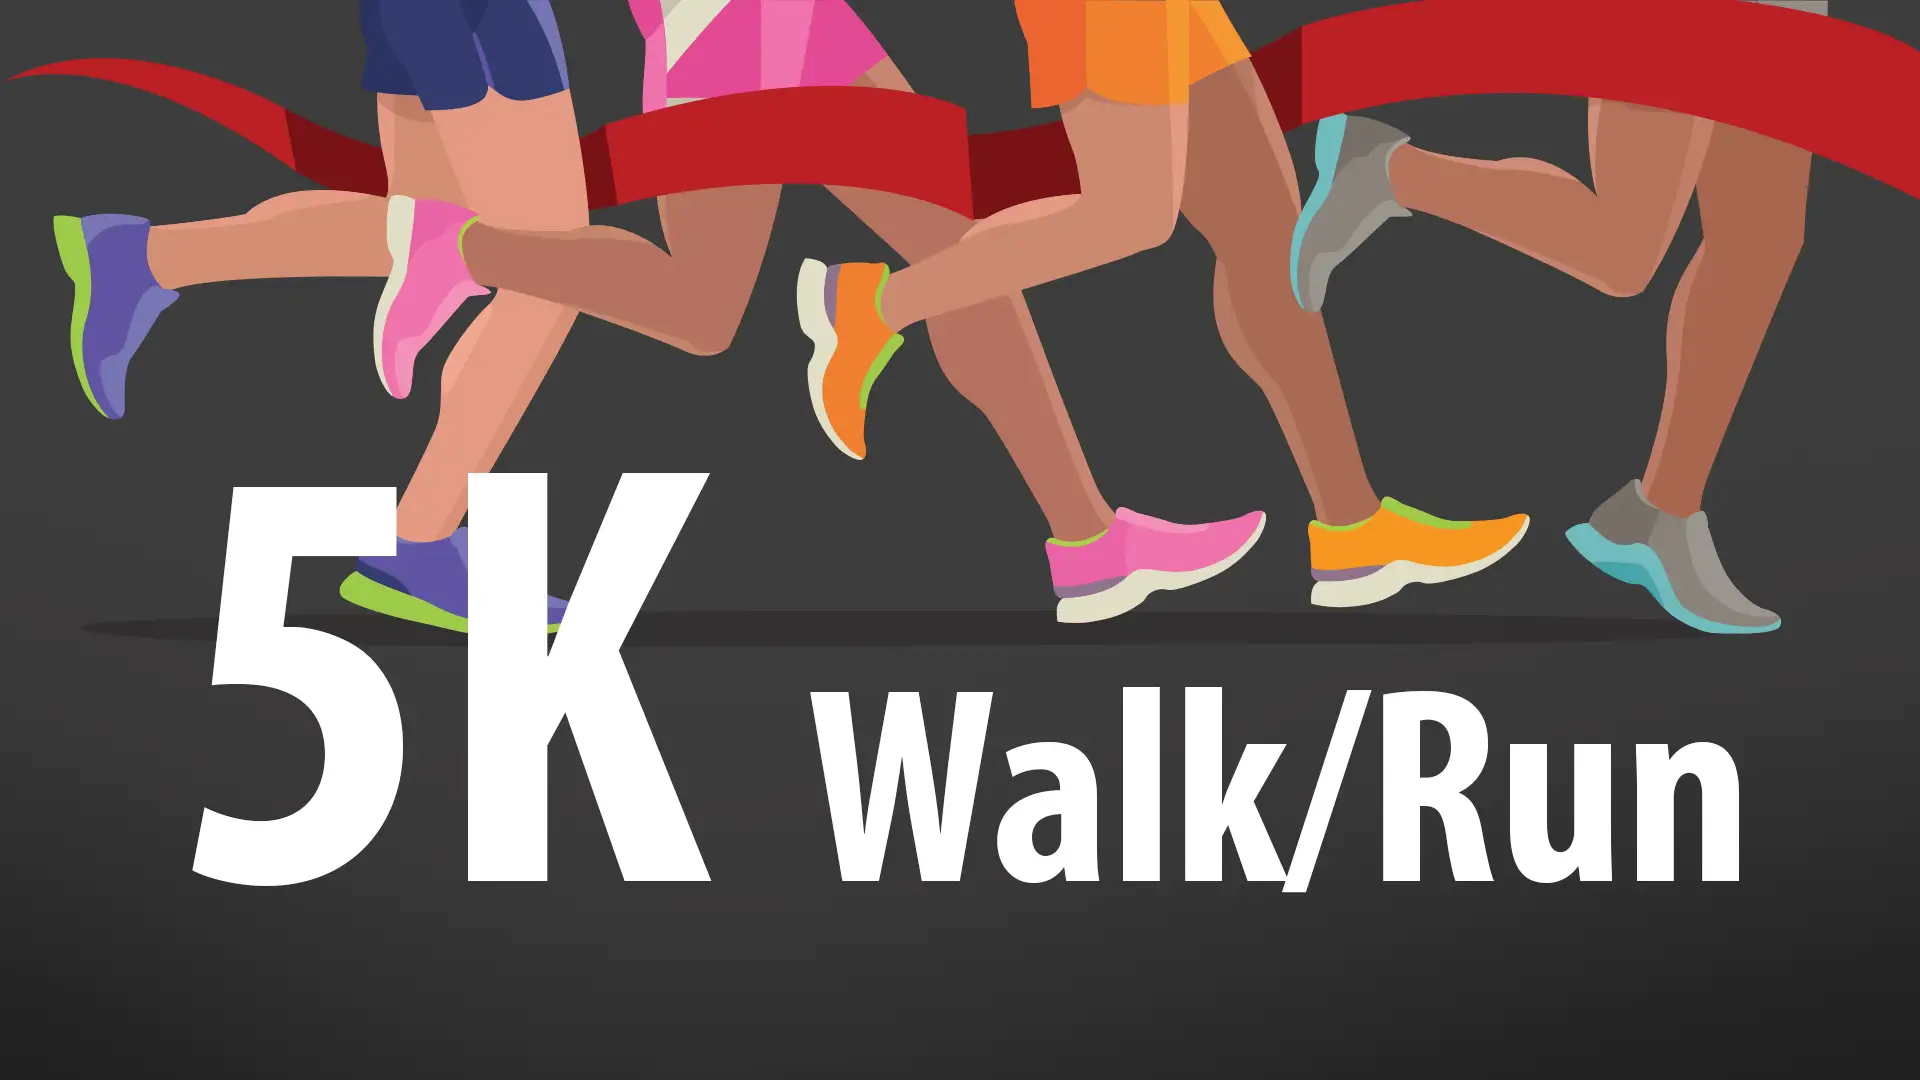 5k Walk Run graphic with vector graphic of legs running.